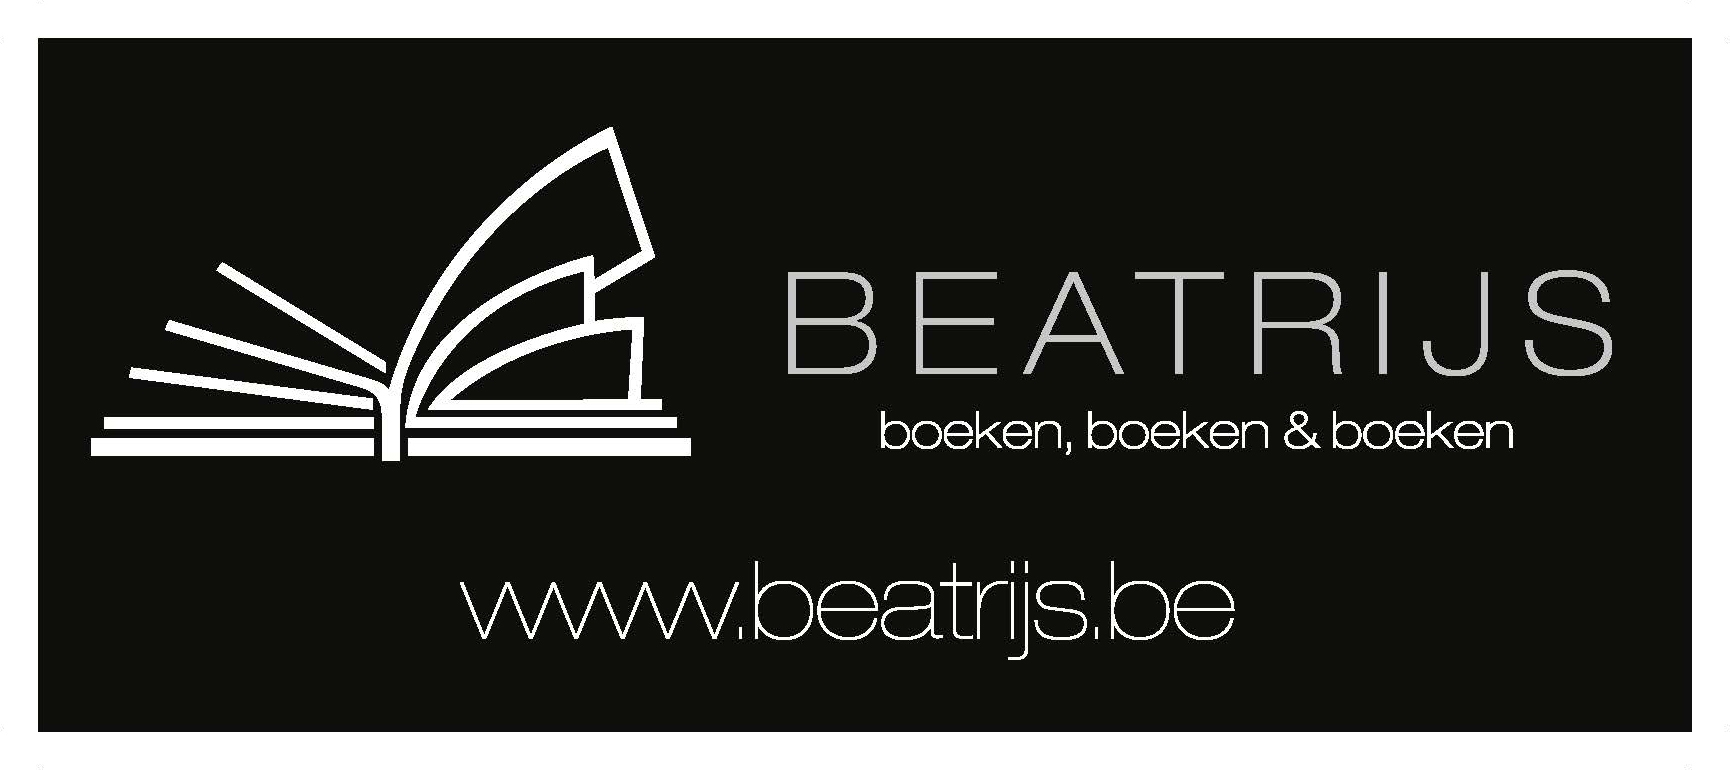 Beatrijs-logo-2010_Black